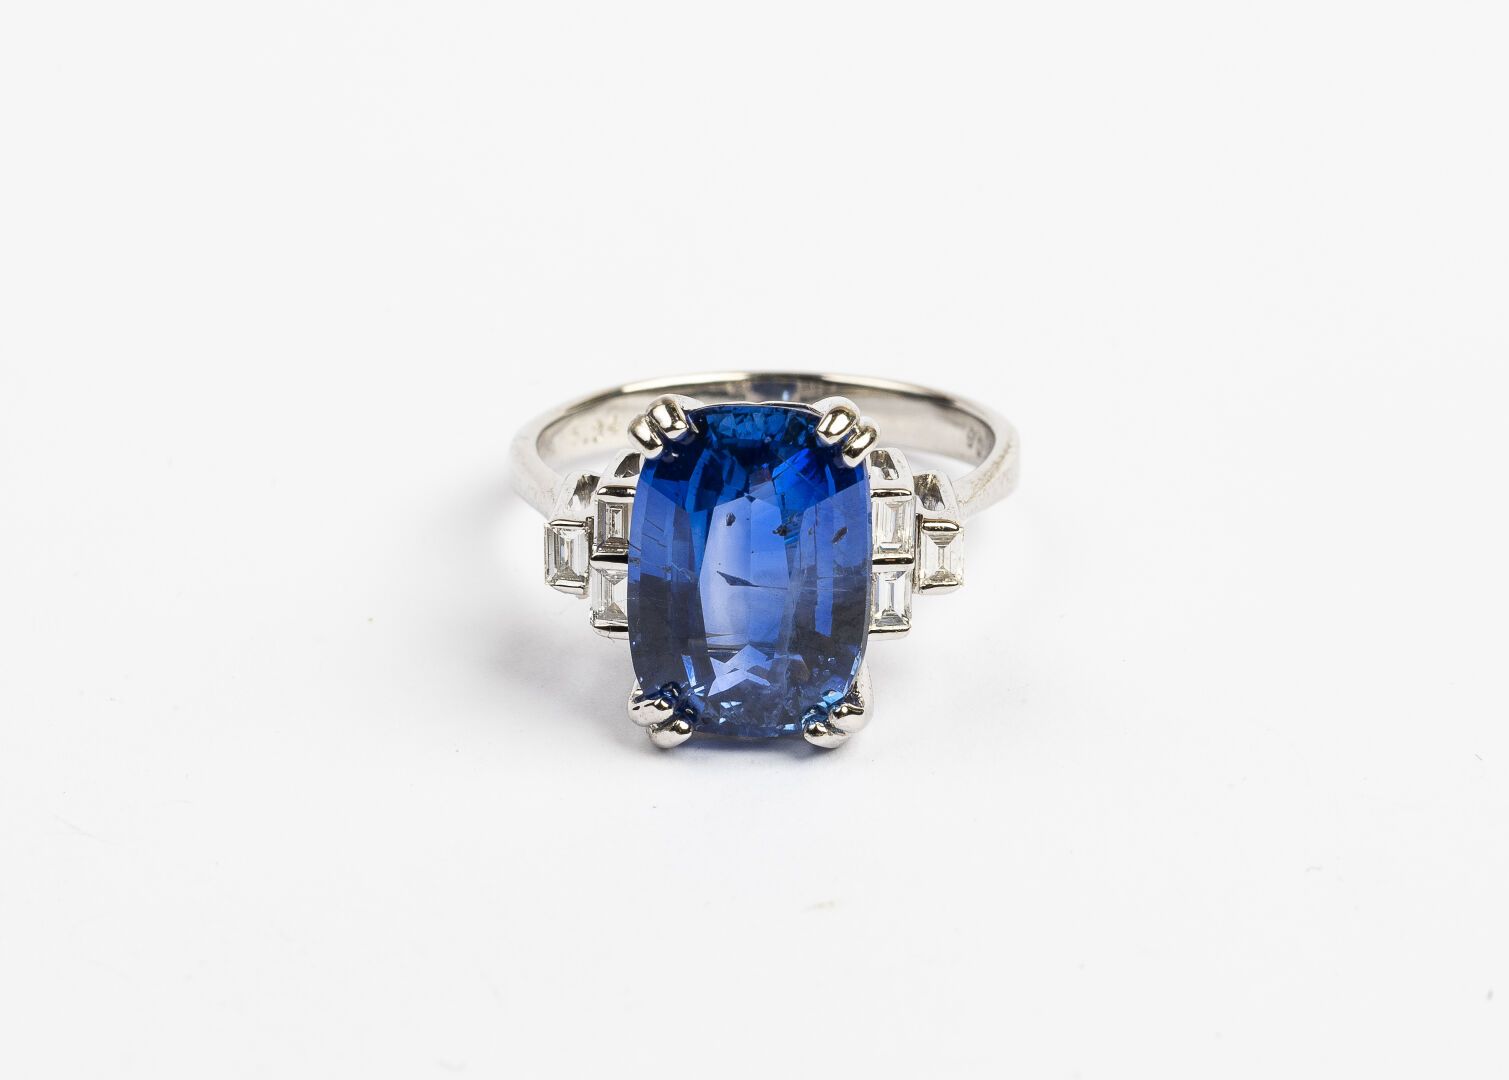 Null 戒指

白金材质，750°/°。

镶嵌着一颗5.33克拉的椭圆形蓝宝石，无热效应（Gam Lab证书），长方形钻石层层叠叠。

毛重：4.9克 - &hellip;